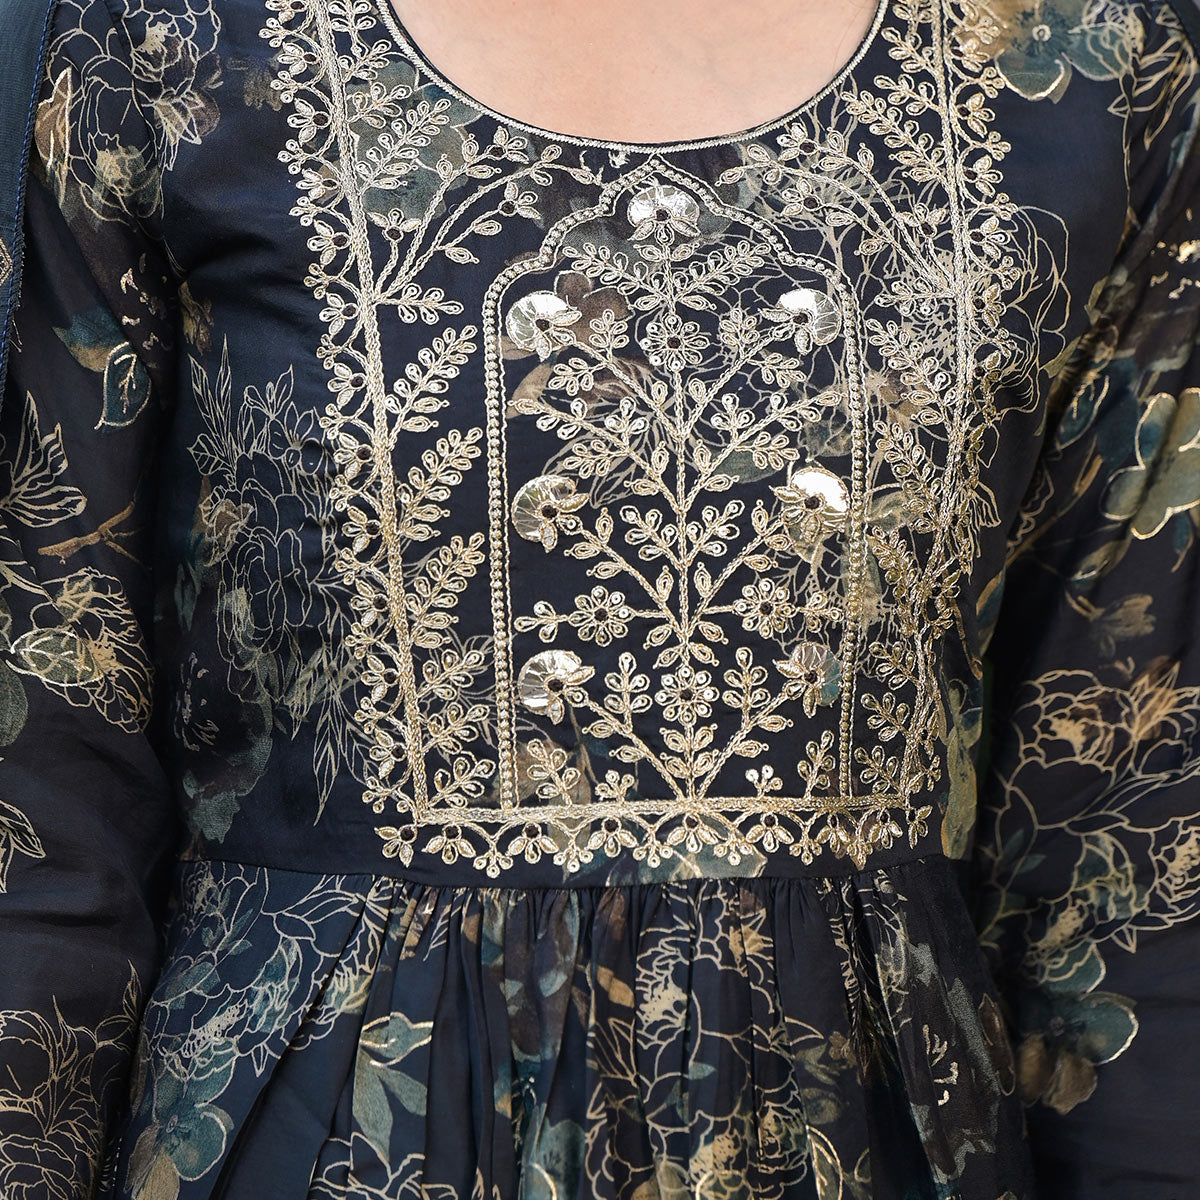 Black Floral Embroidered Chanderi Silk Sharara Suit